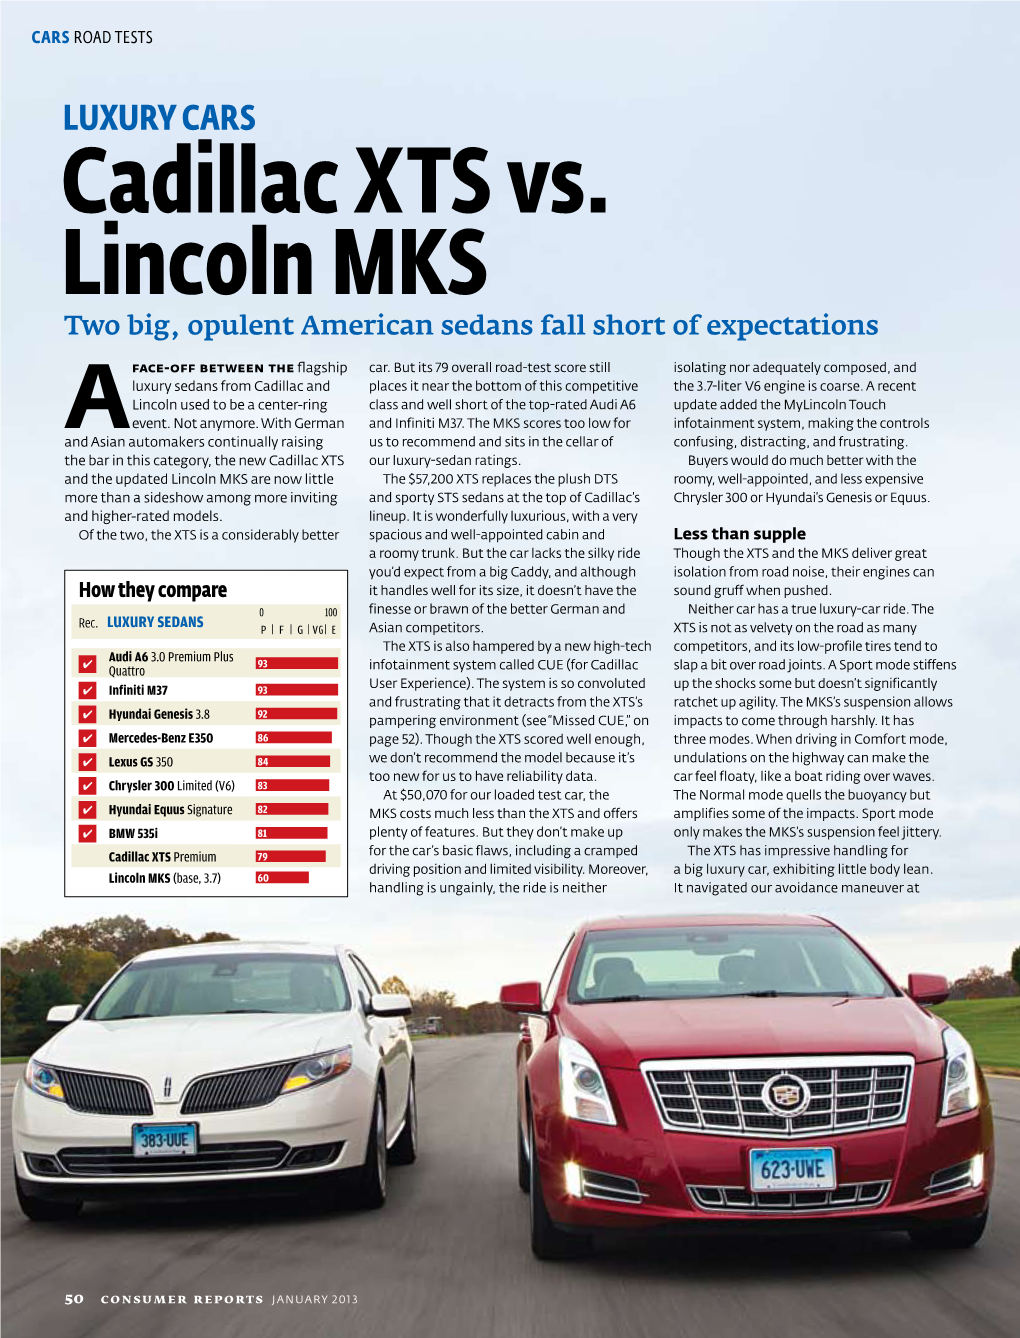 Cadillac XTS Vs. Lincoln MKS Two Big, Opulent American Sedans Fall Short of Expectations